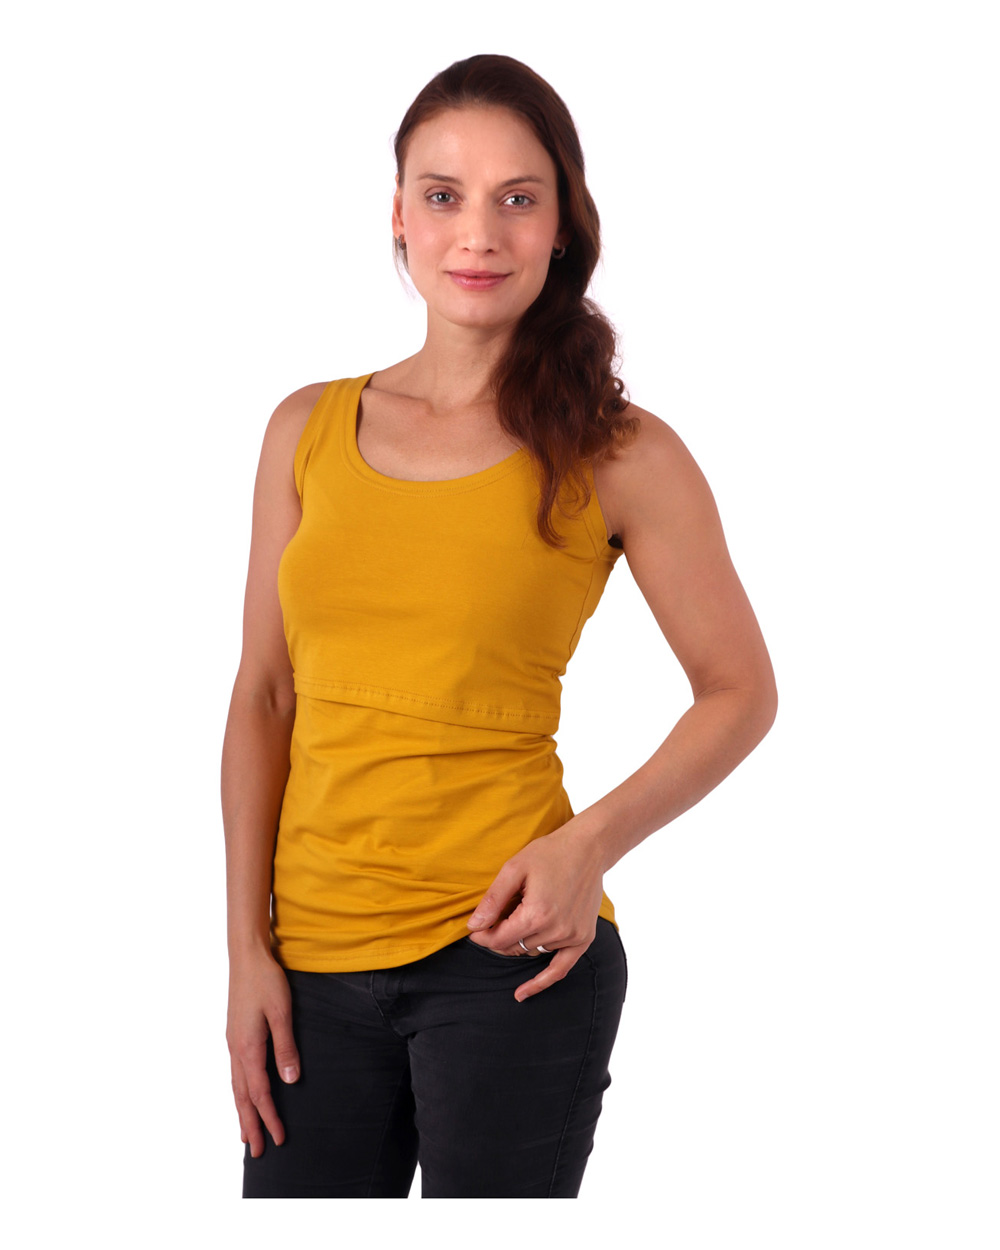 Breast-feeding T-shirt Katerina, no sleeves, mustard